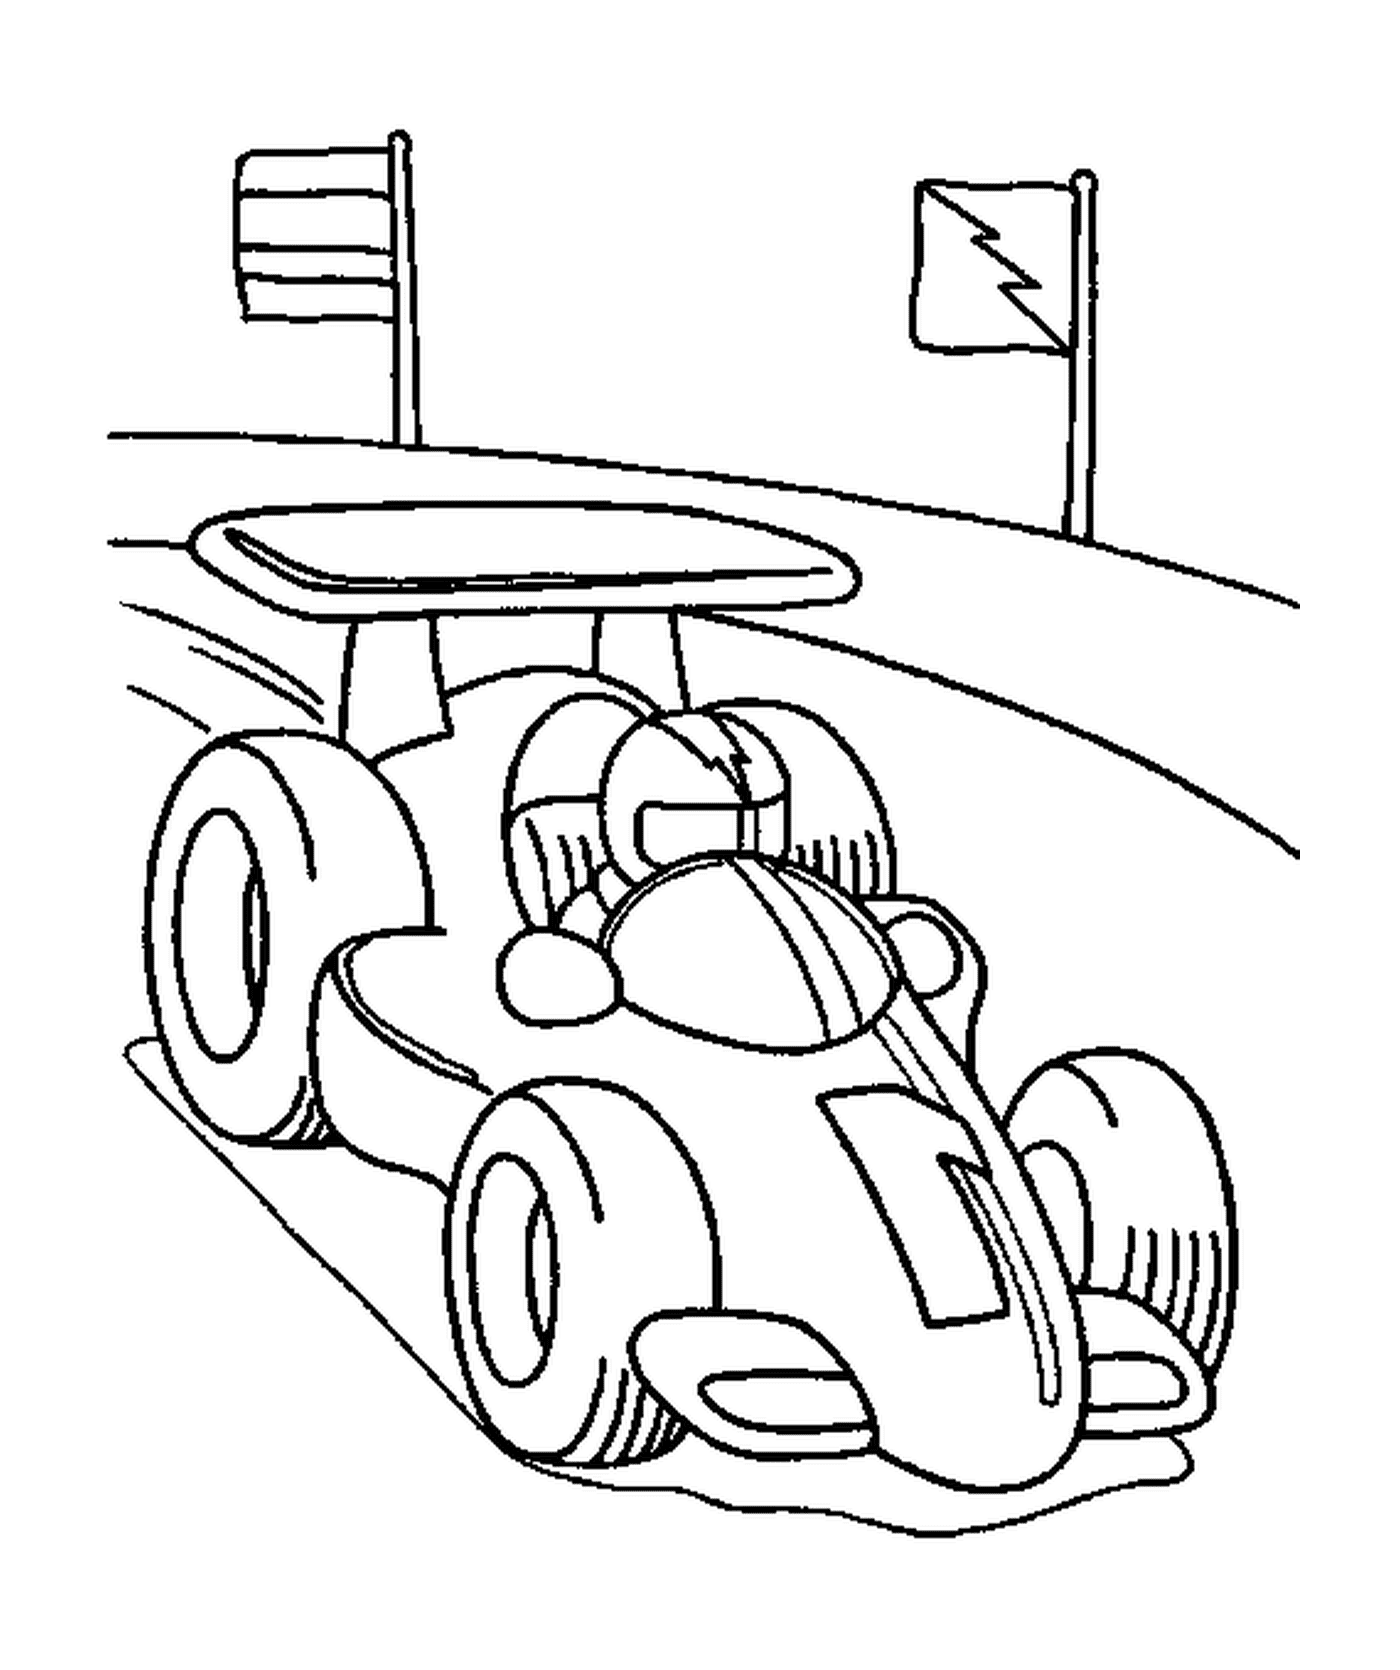  Автомобиль Формулы 1 